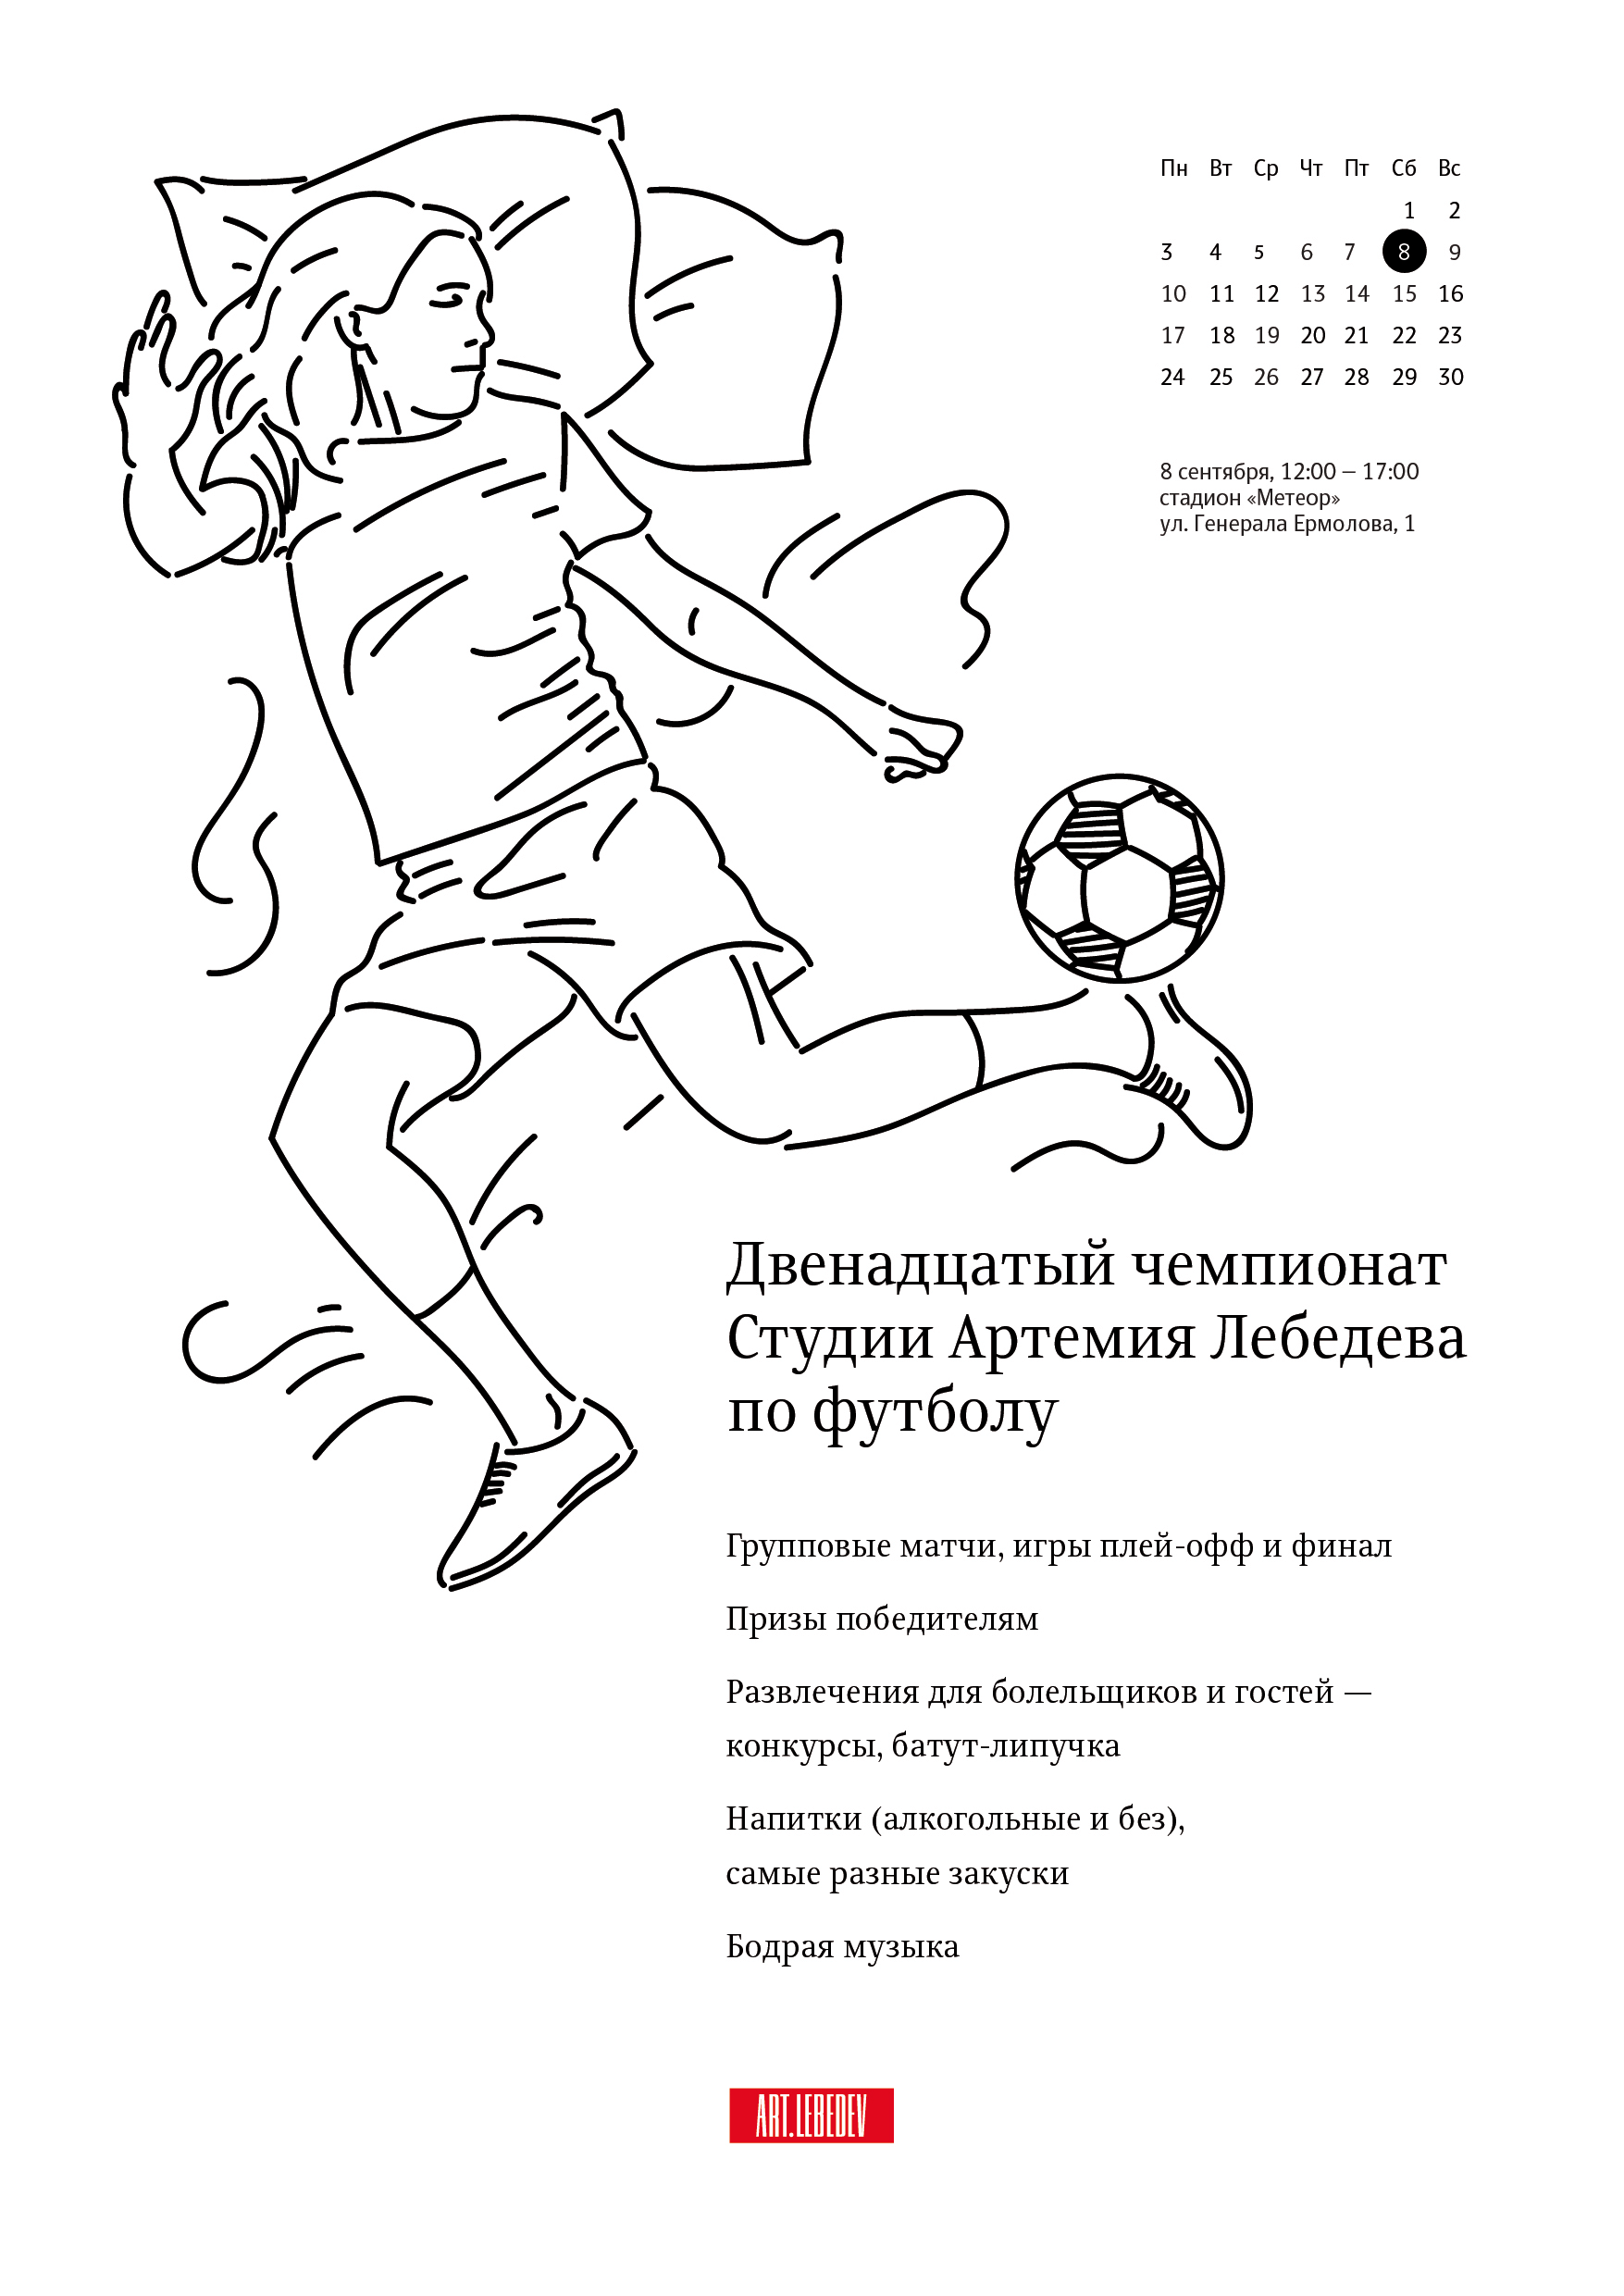 football poster 2018 05